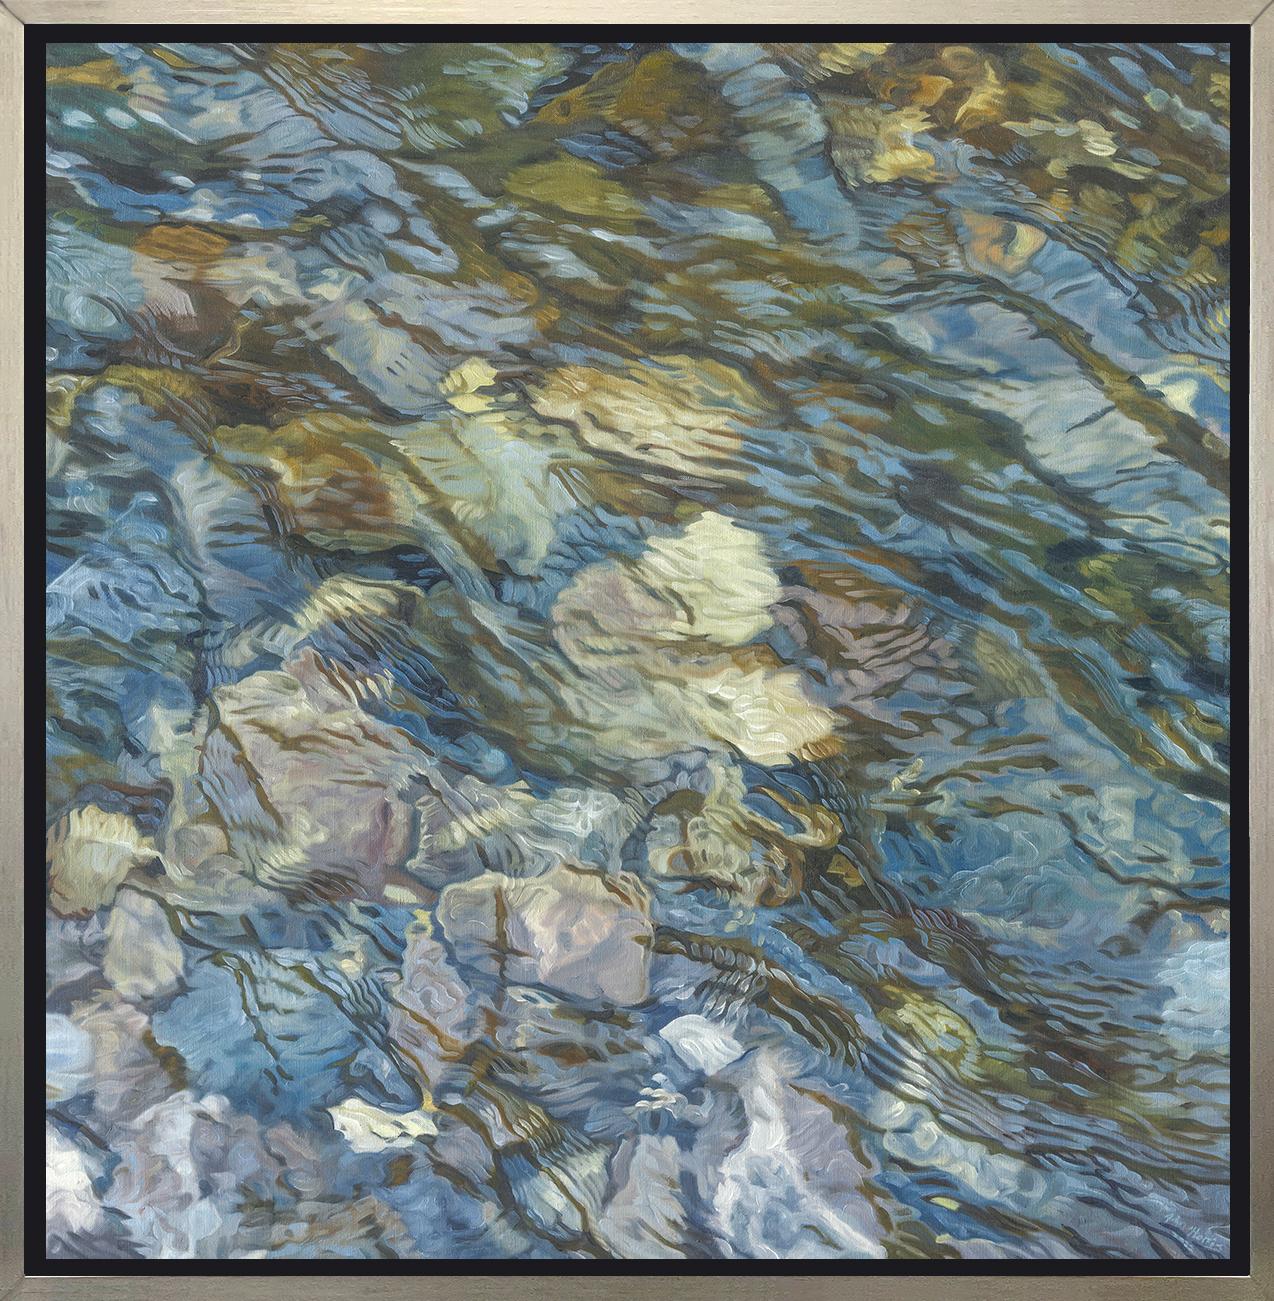 John Harris (painter) Landscape Print - "Riverbed 4, " Framed Limited Edition Giclee Print, 48" x 48"